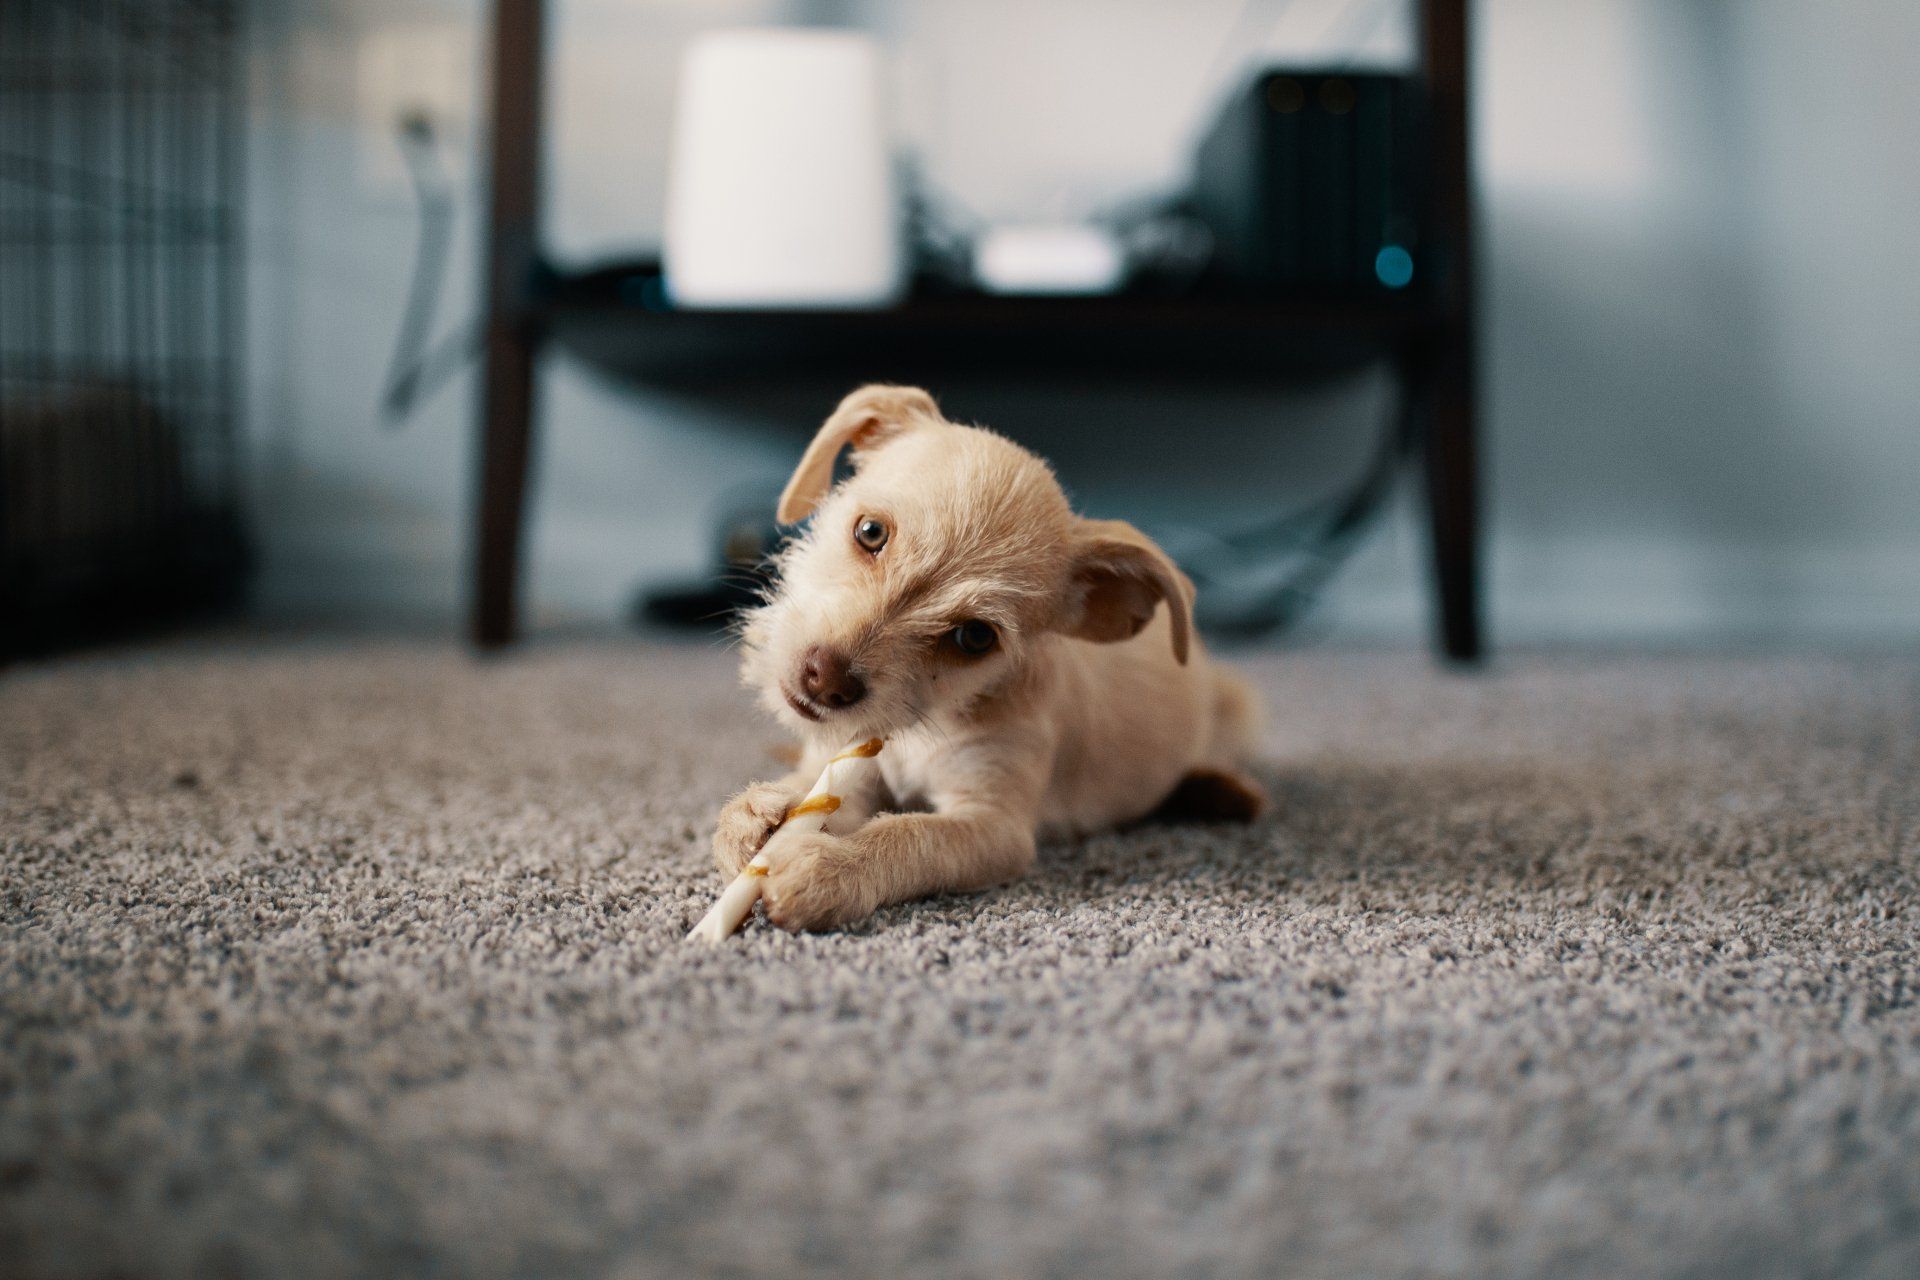 Dog Eating Treat while Lying on the Carpet